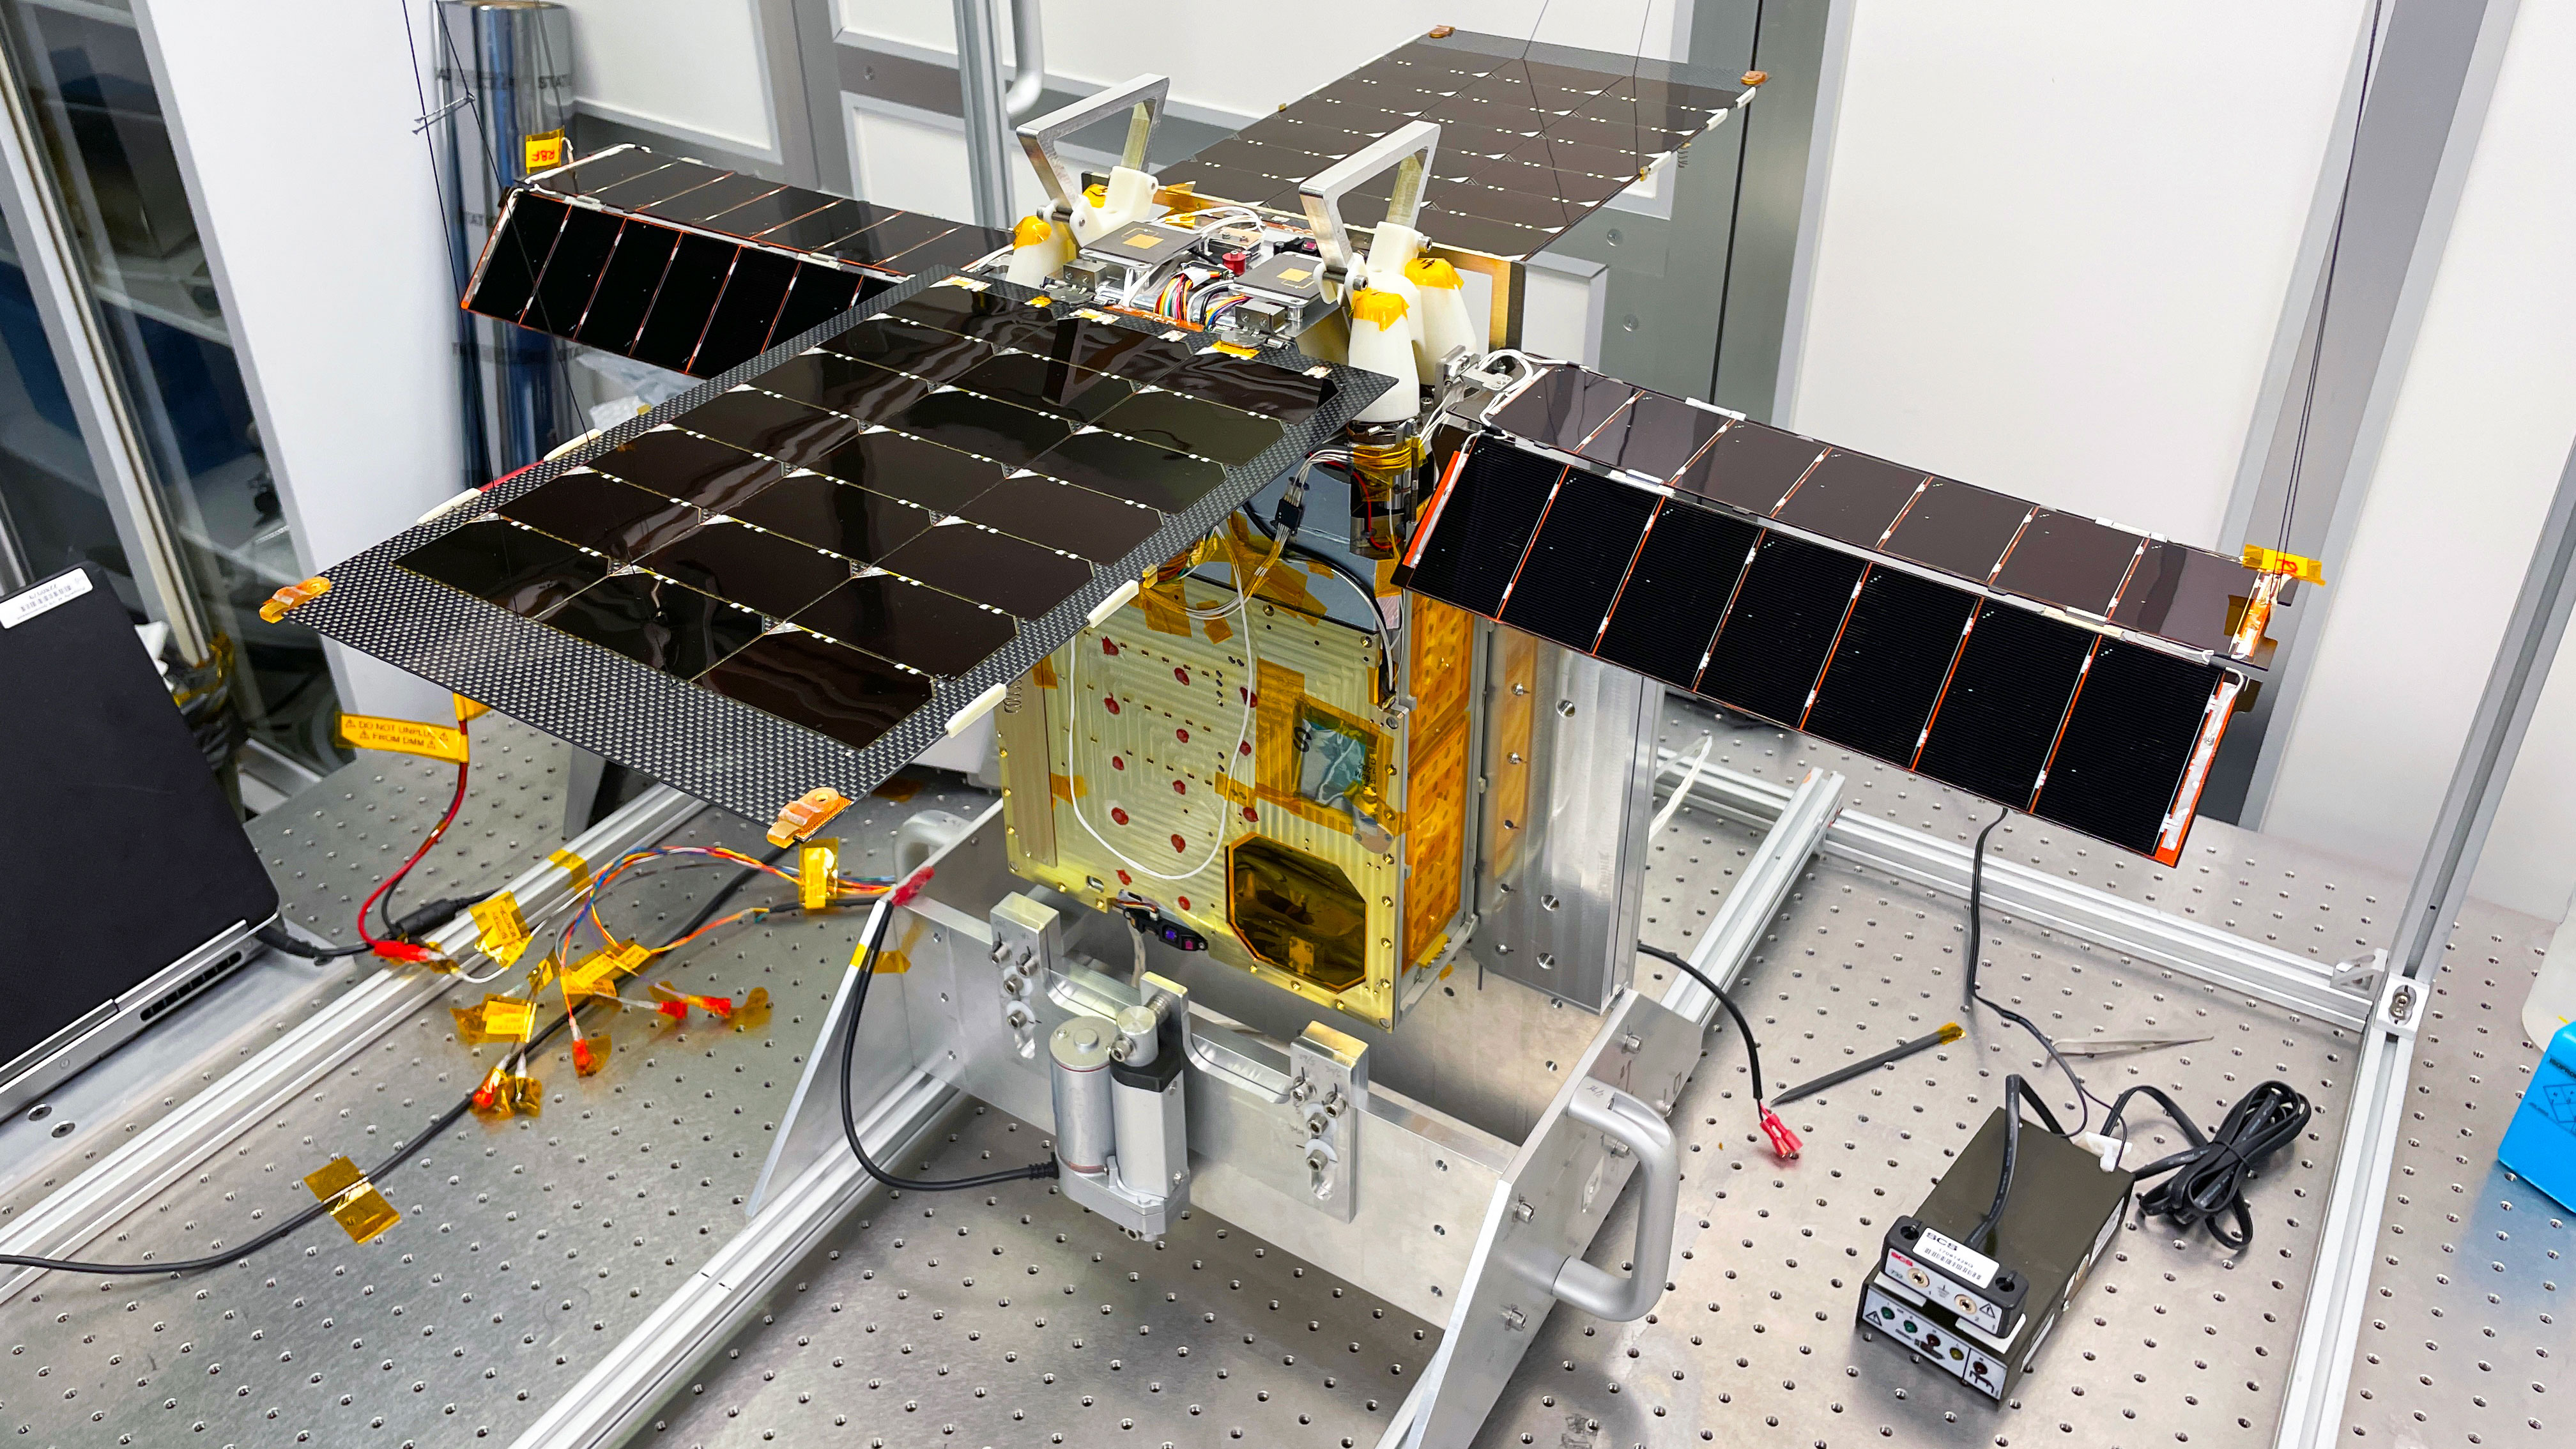 NASA's Coating Technology Could Help Resolve Lunar Dust Challenge - NASA